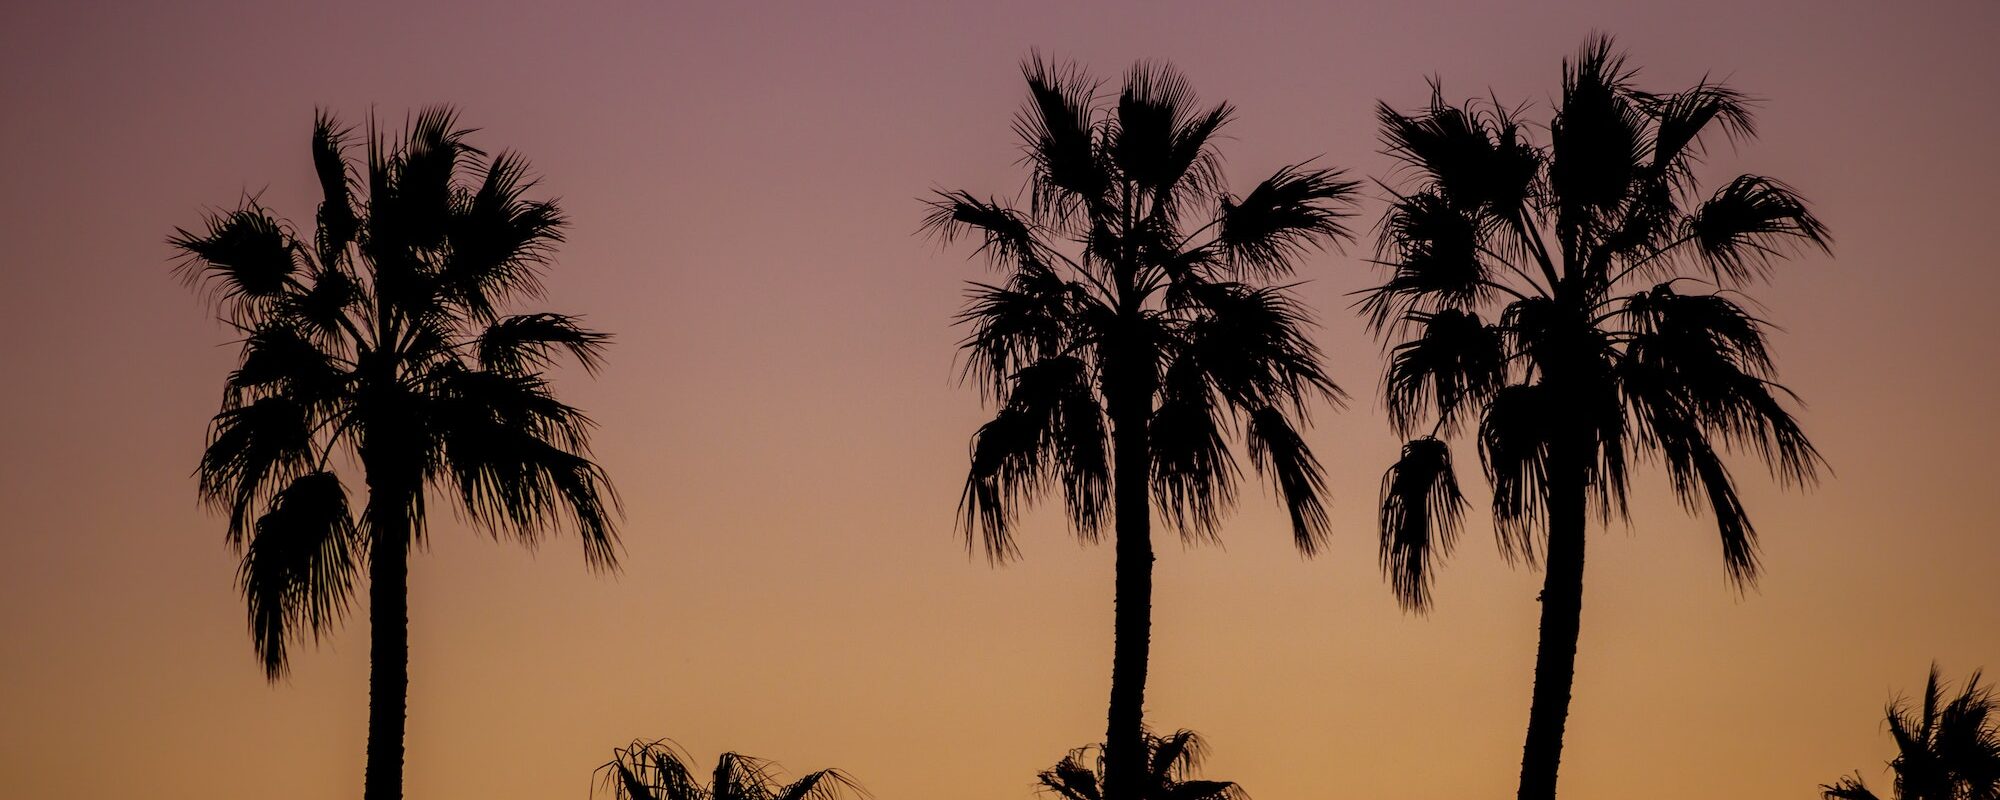 Dawn of palm trees silhouette during sunset Phoenix Arizona United States